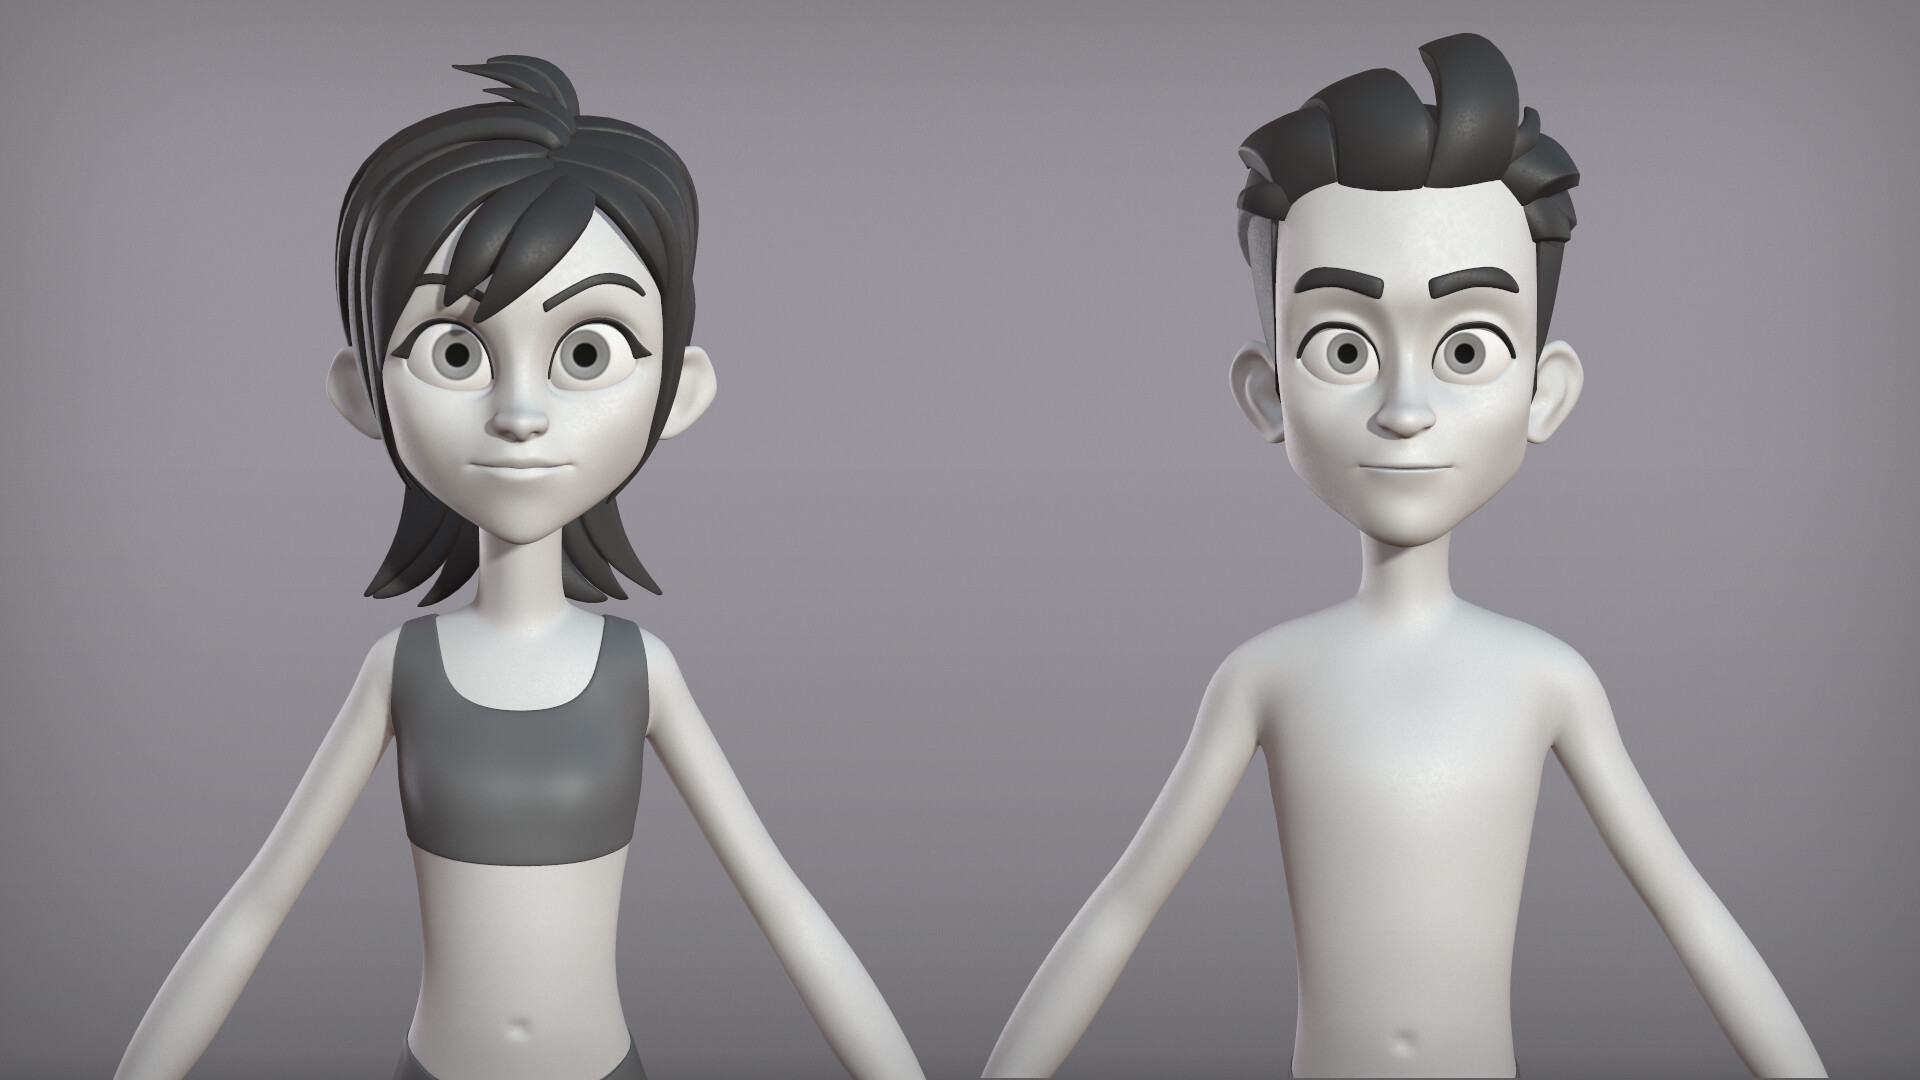 ArtStation - Male and female cartoon characters base mesh